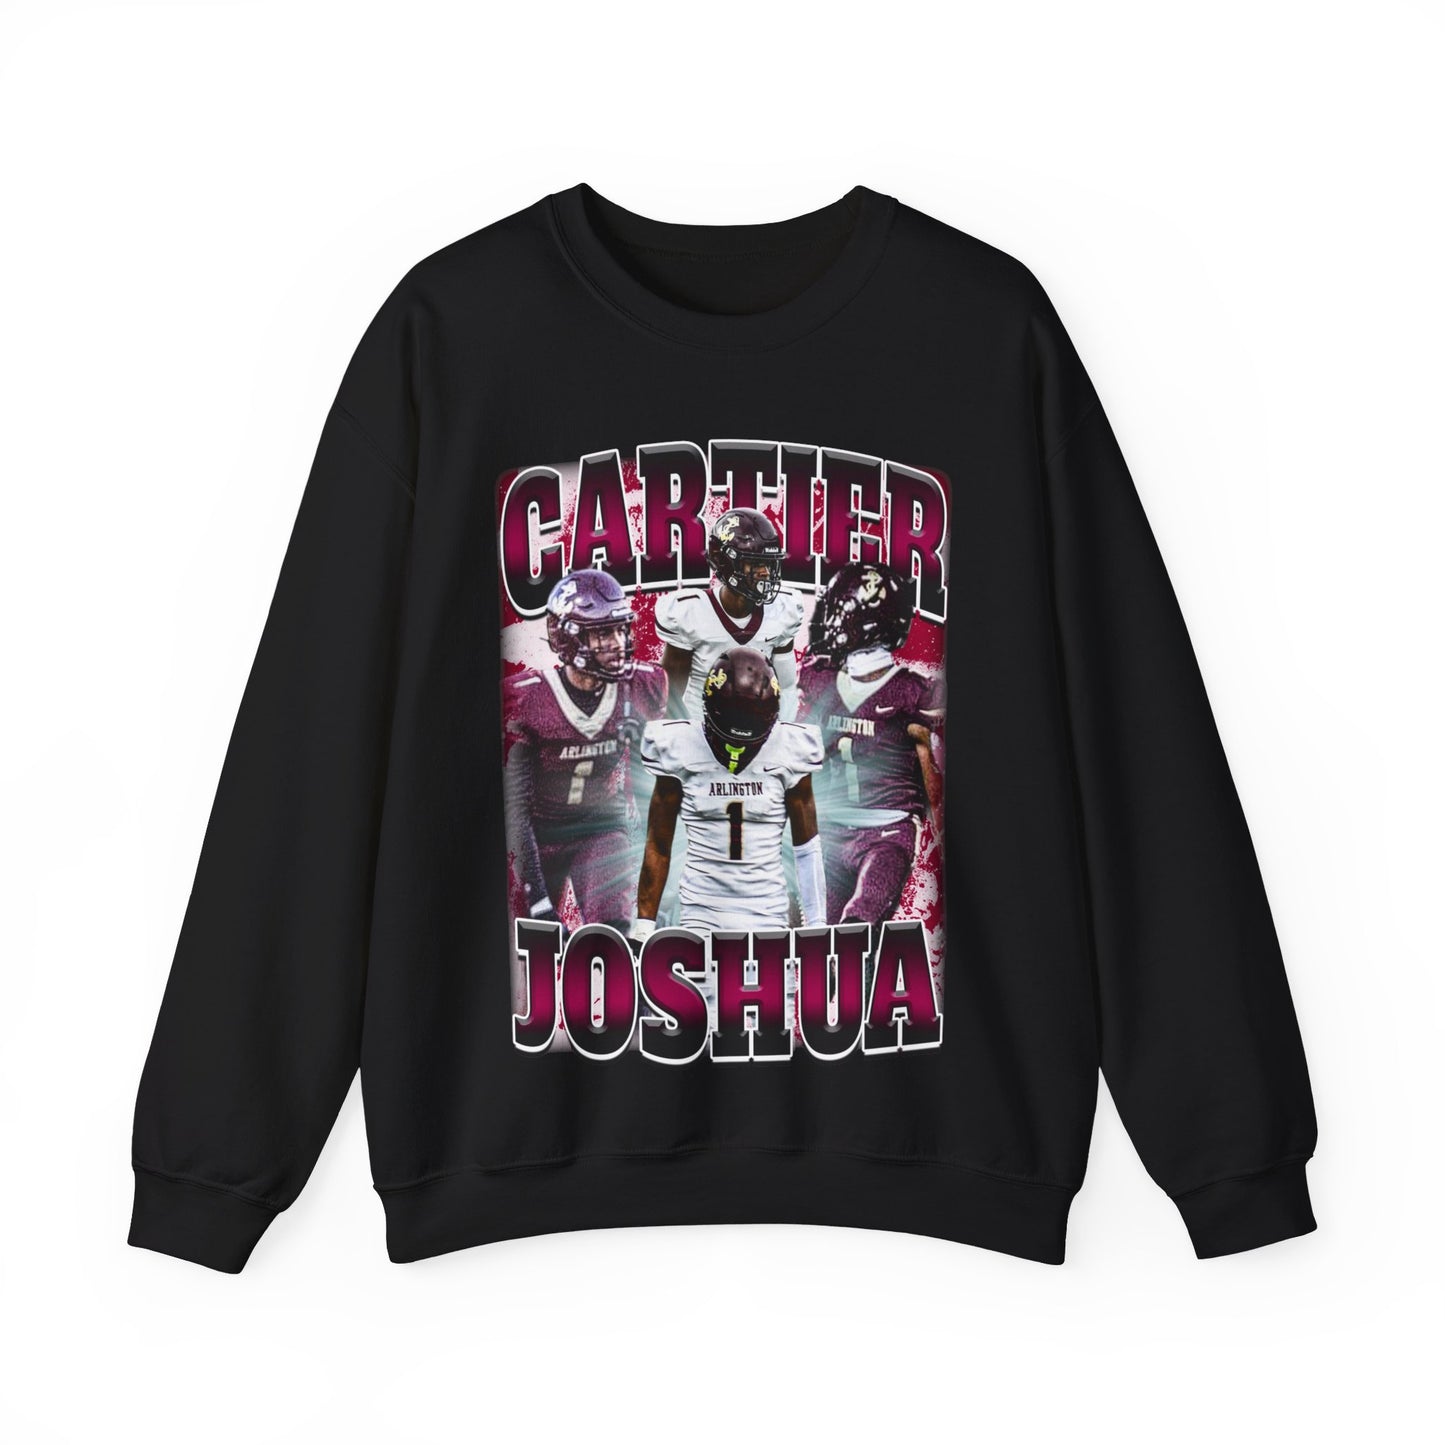 Cartier Joshua Crewneck Sweatshirt